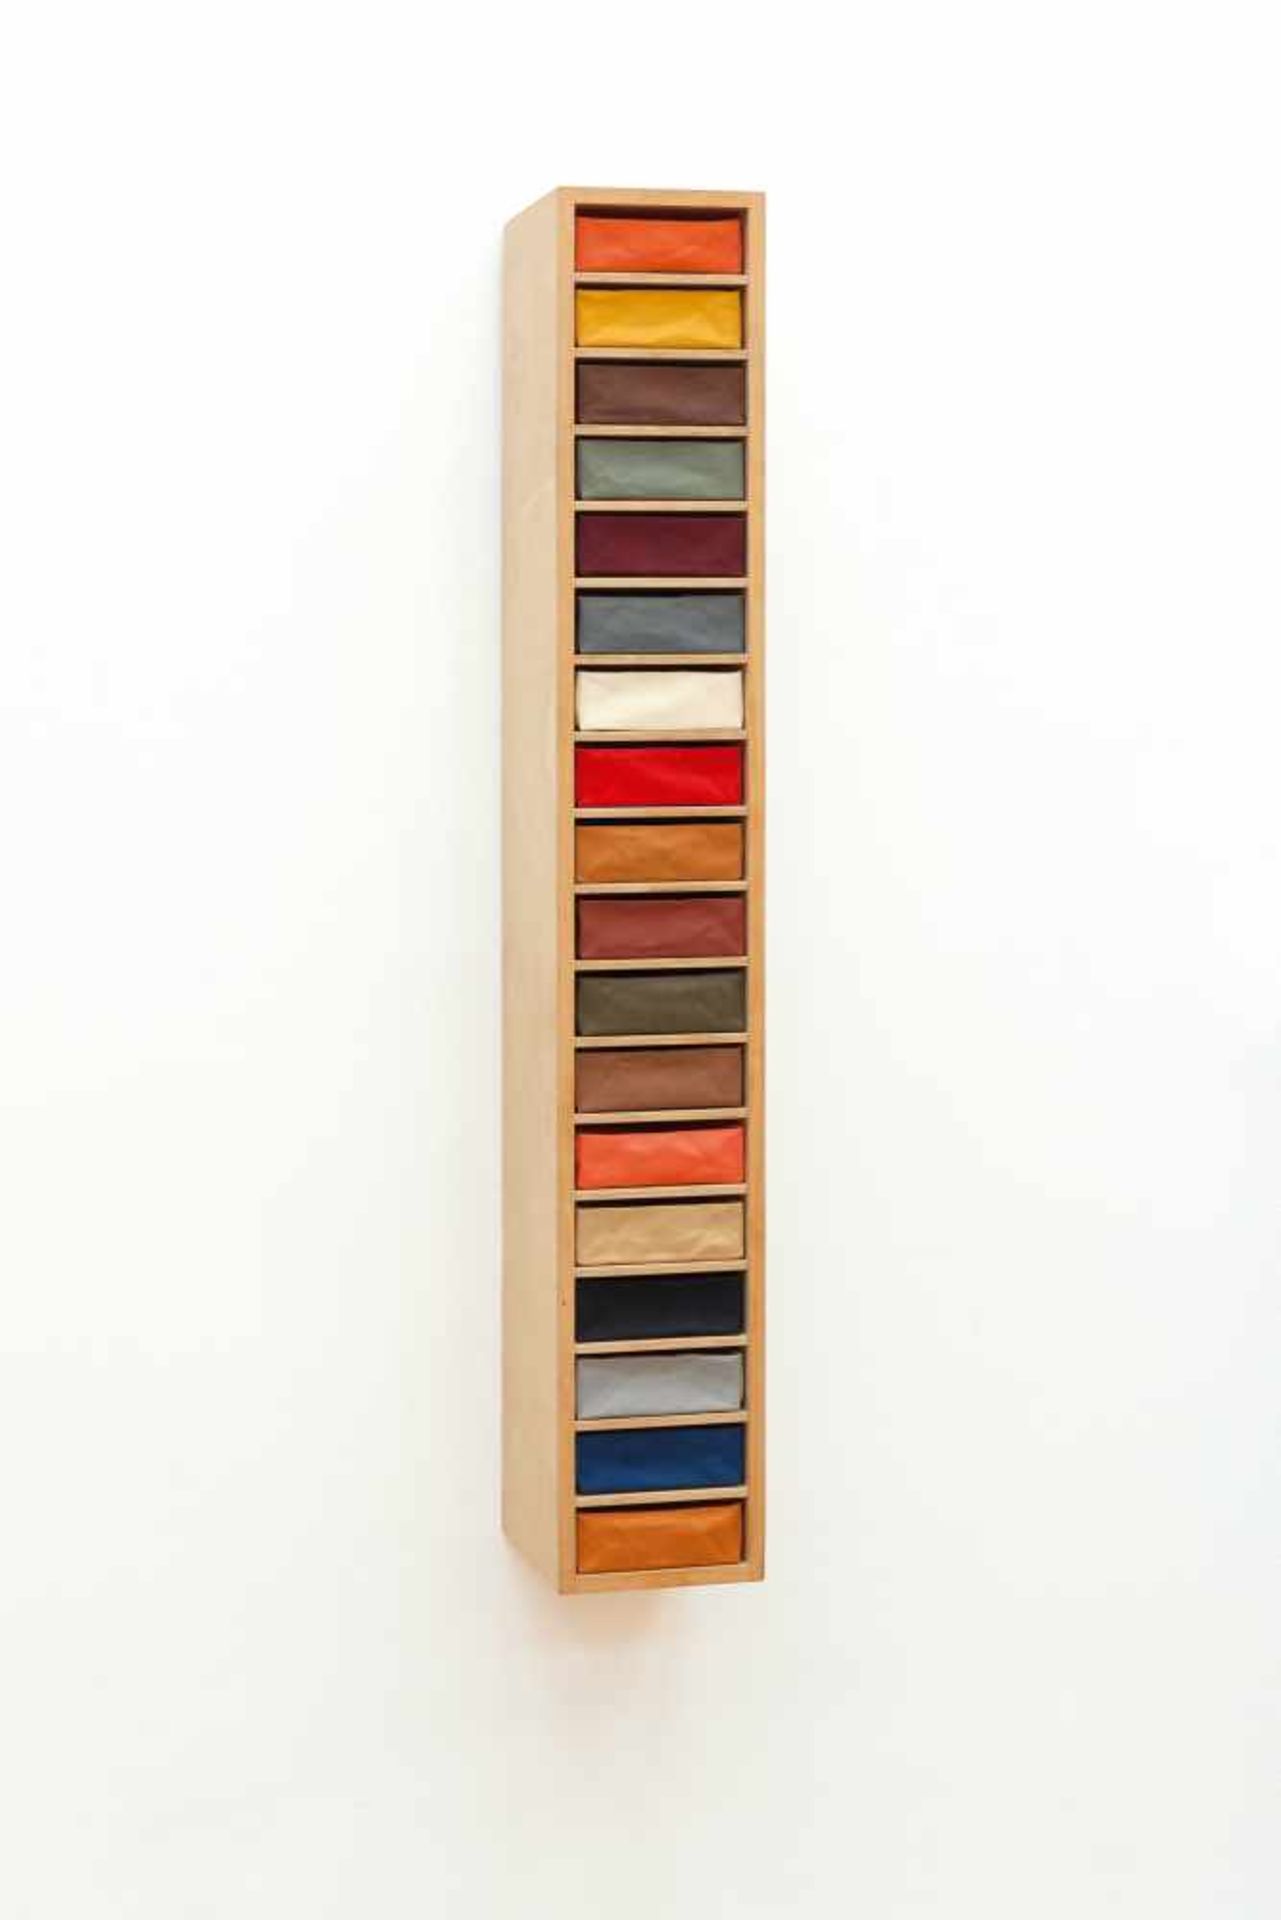 FRANZ ERHARD WALTHER - Wandgesang Baumwollstoff (18 Teile) in Holzkorpus. (1990). Ca. 151,5 x 22,5 x